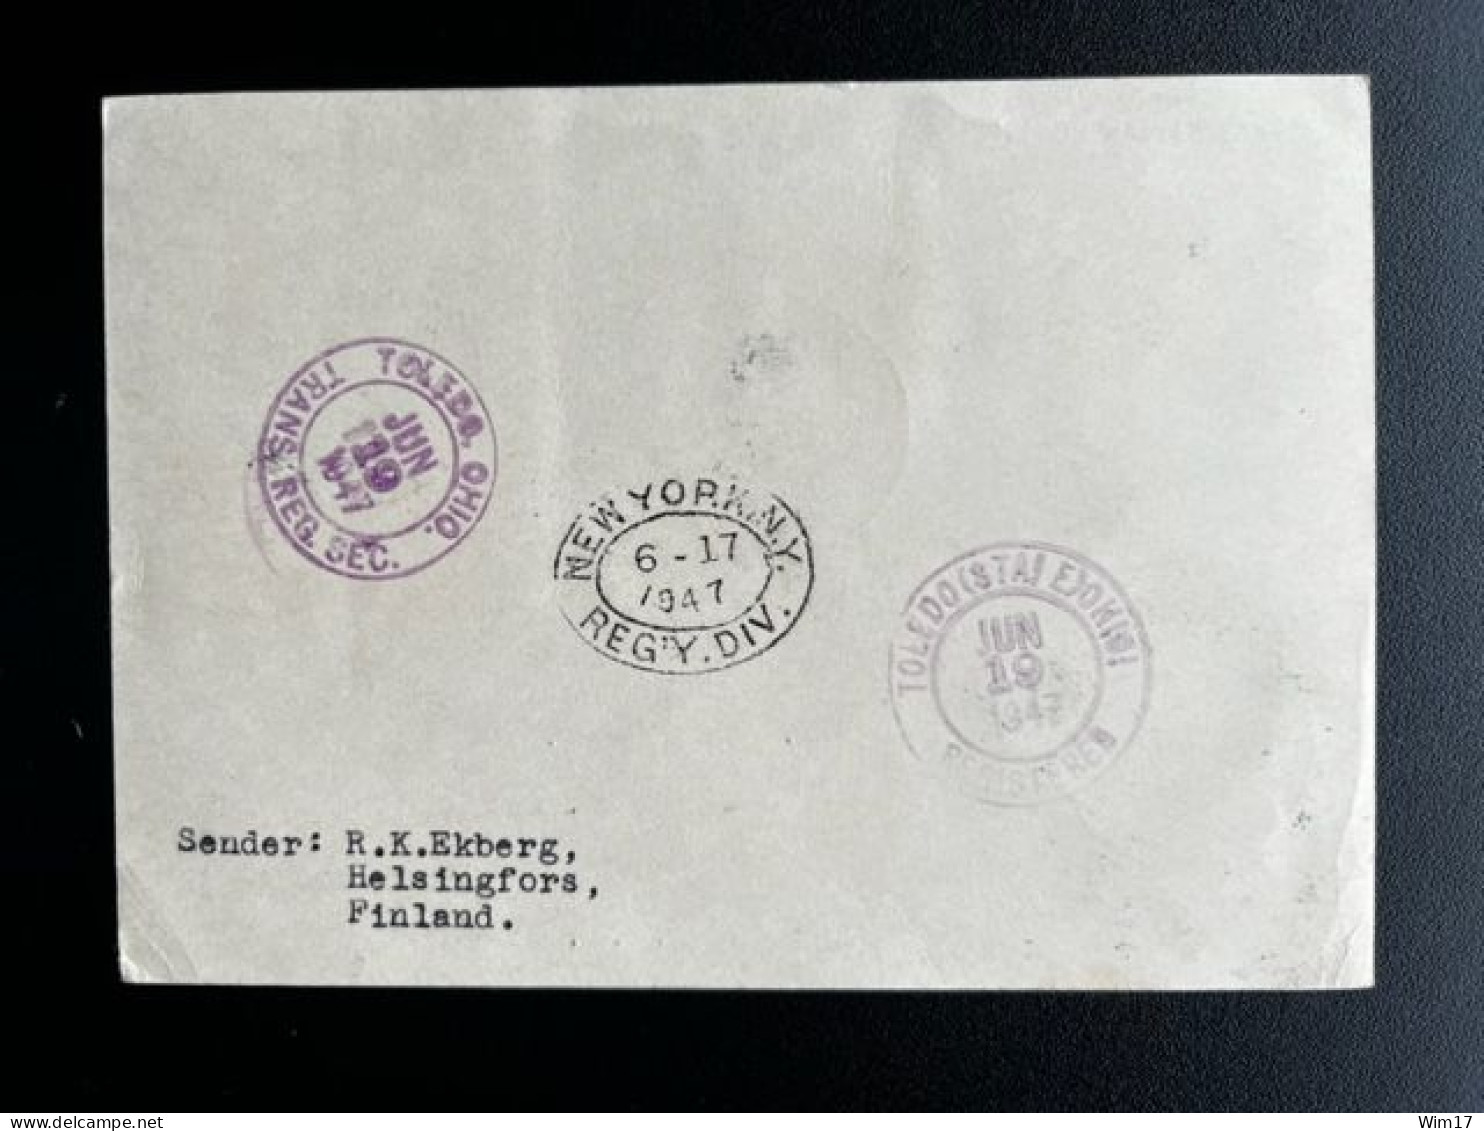 FINLAND SUOMI 1947 REGISTERED POSTCARD HELSINKI HELSINGFORS TO TOLEDO USA 02-06-1947 WITH FIRST DAY CANCEL GYMNASTICS - Briefe U. Dokumente